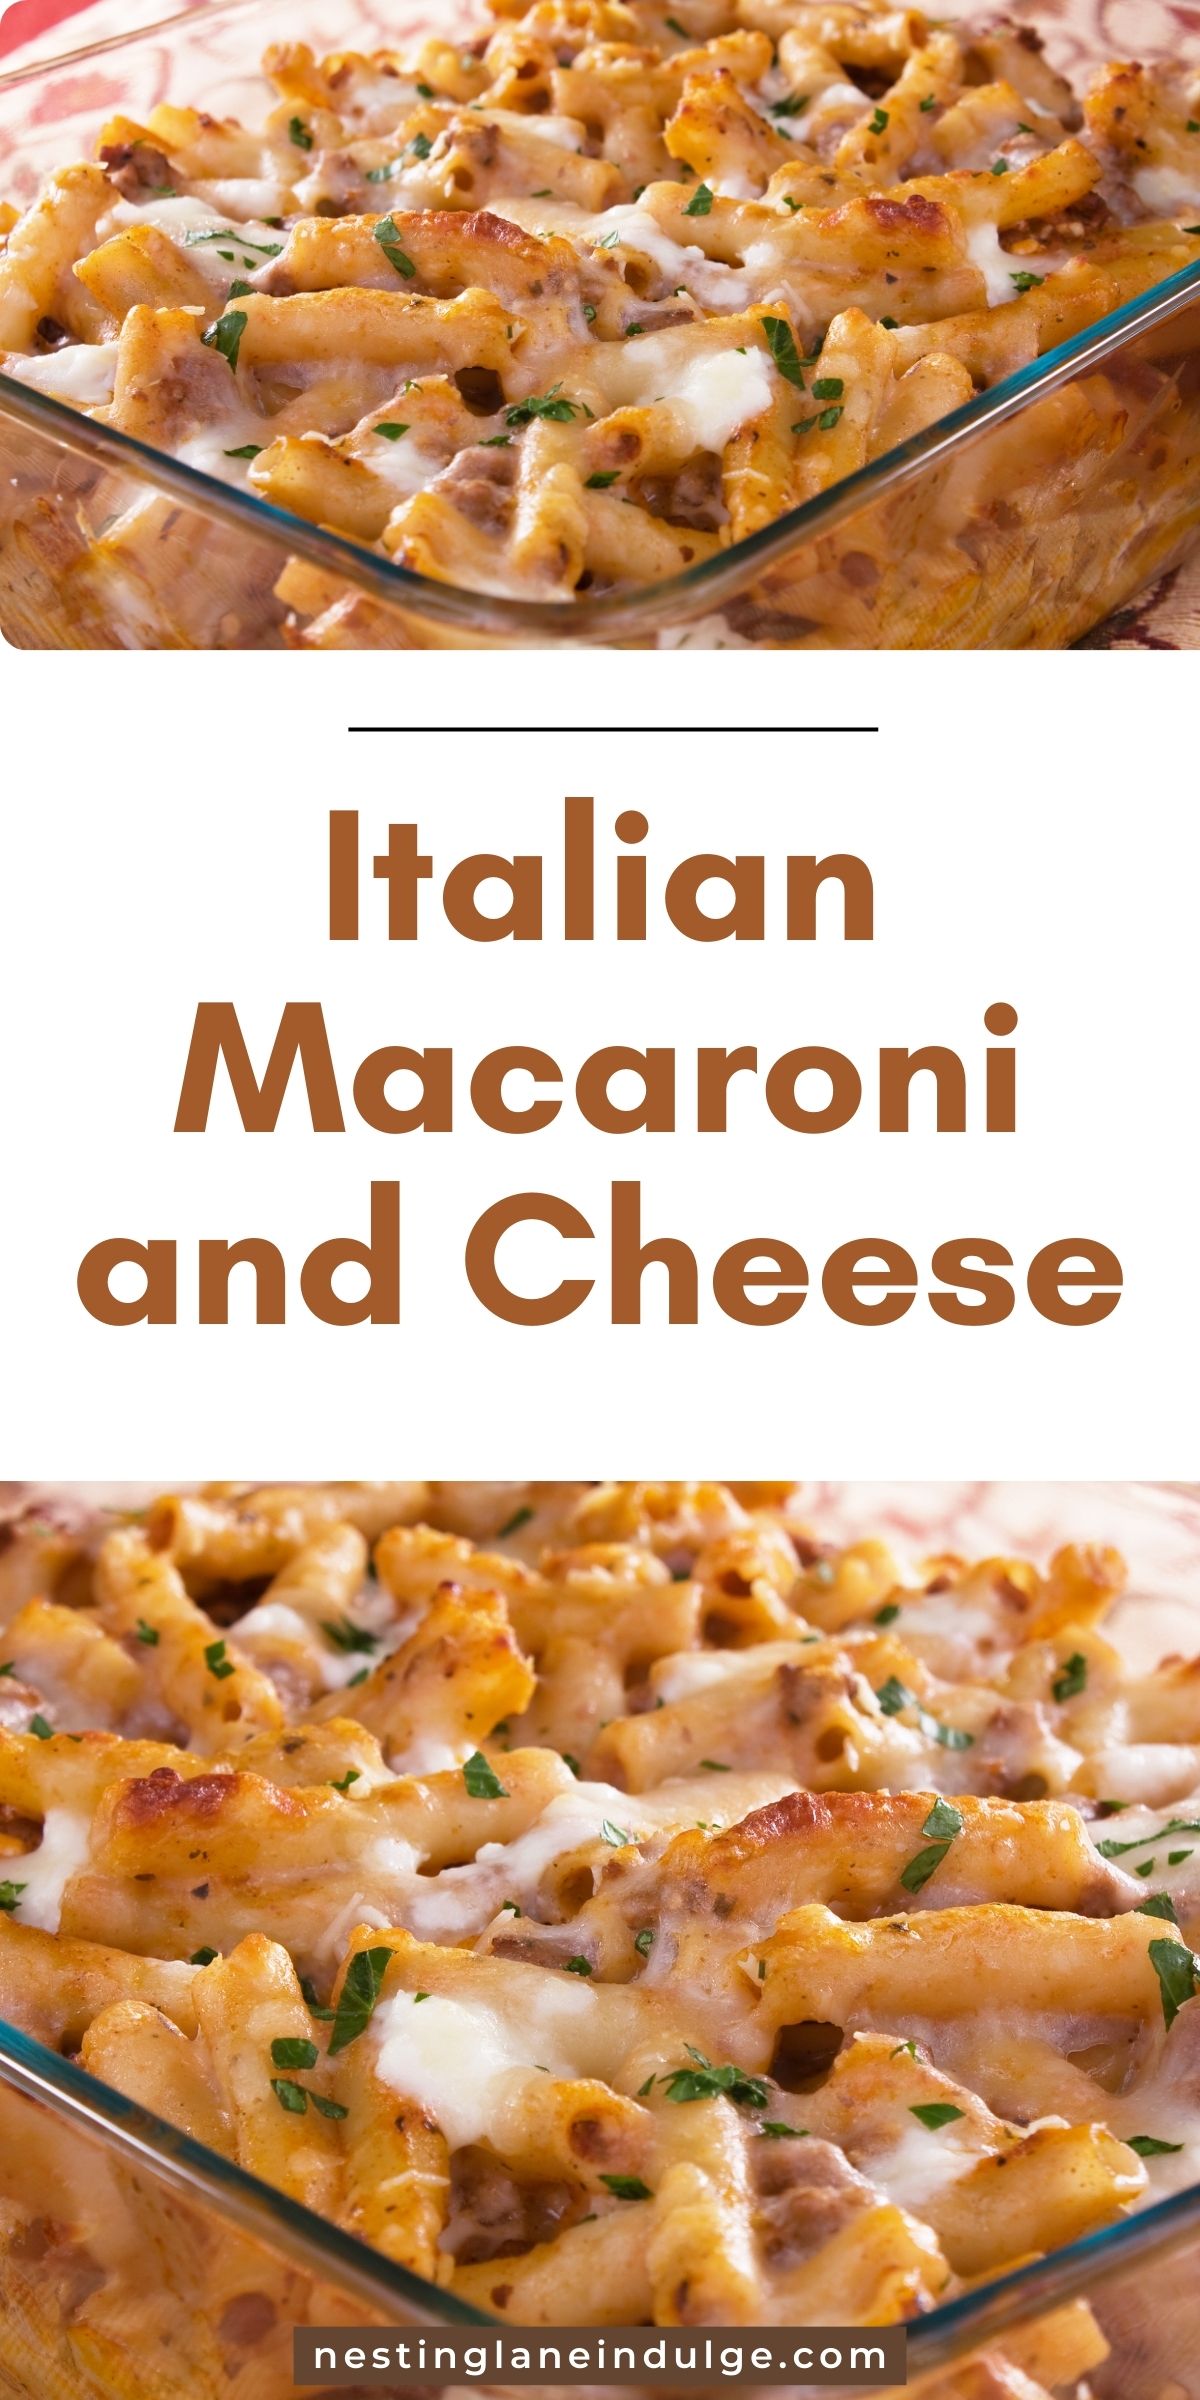 Italian Style Macaroni and Cheese Graphic.